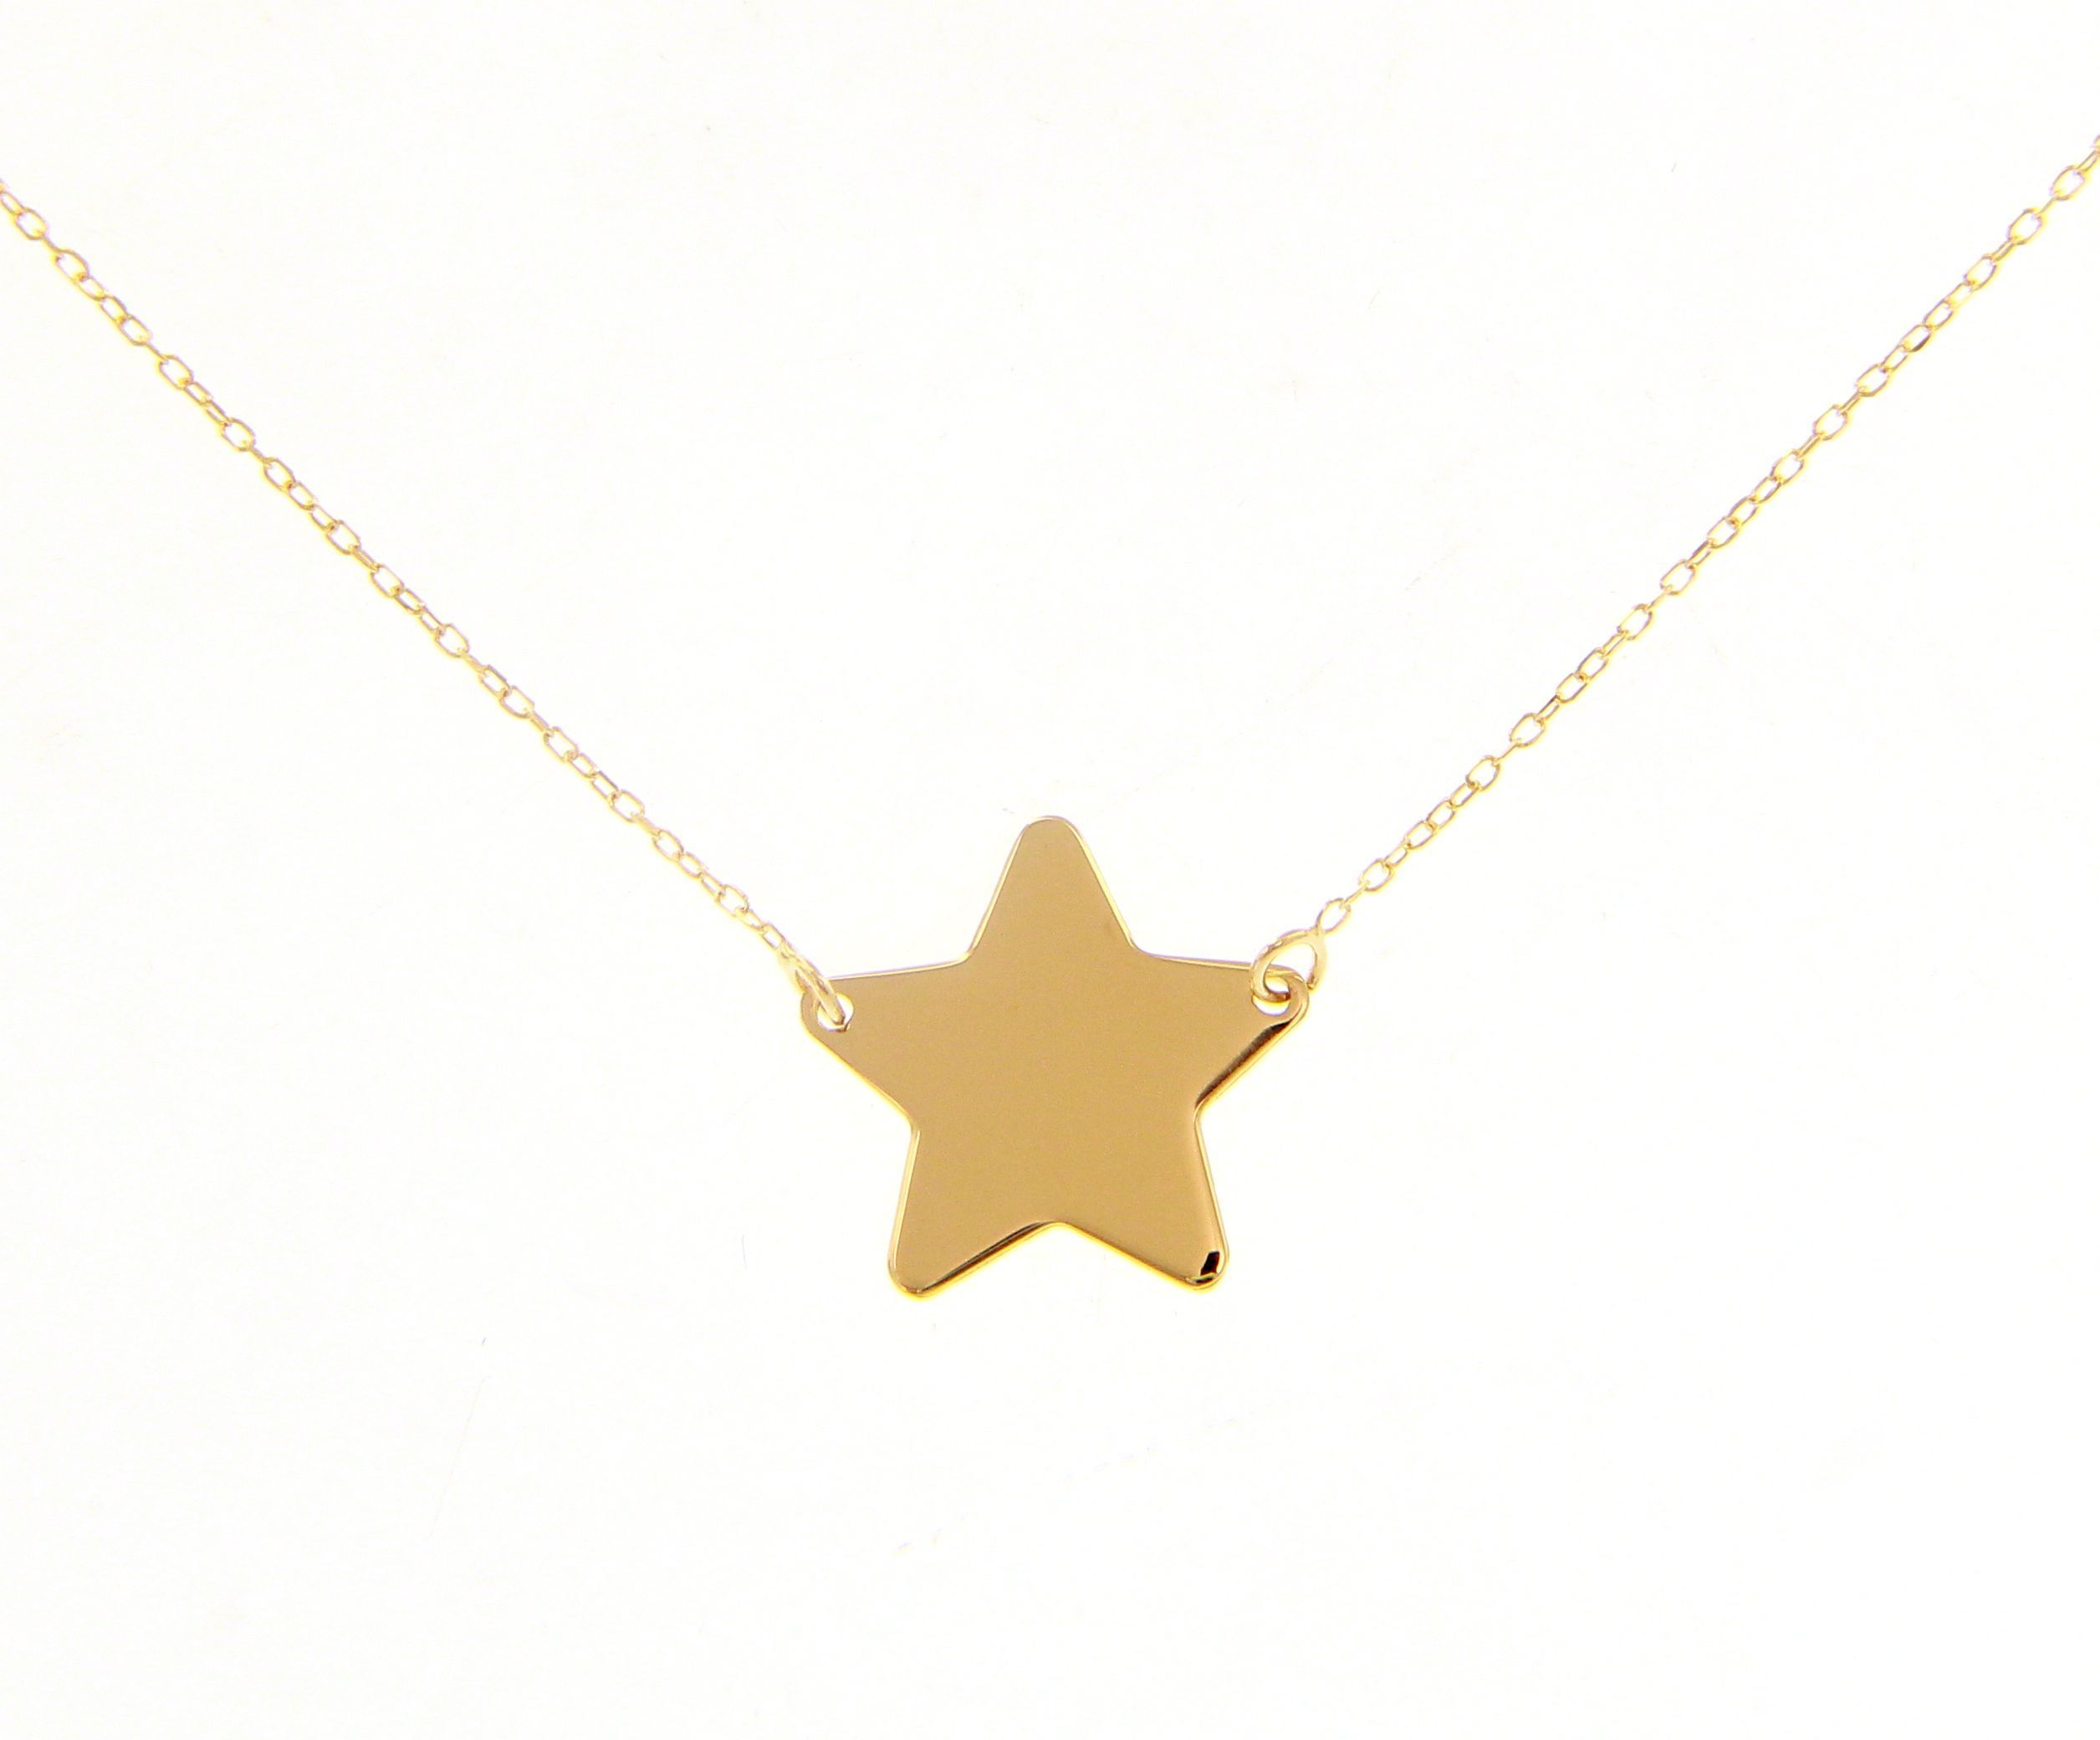 Golden star necklace k14  (code S230898)